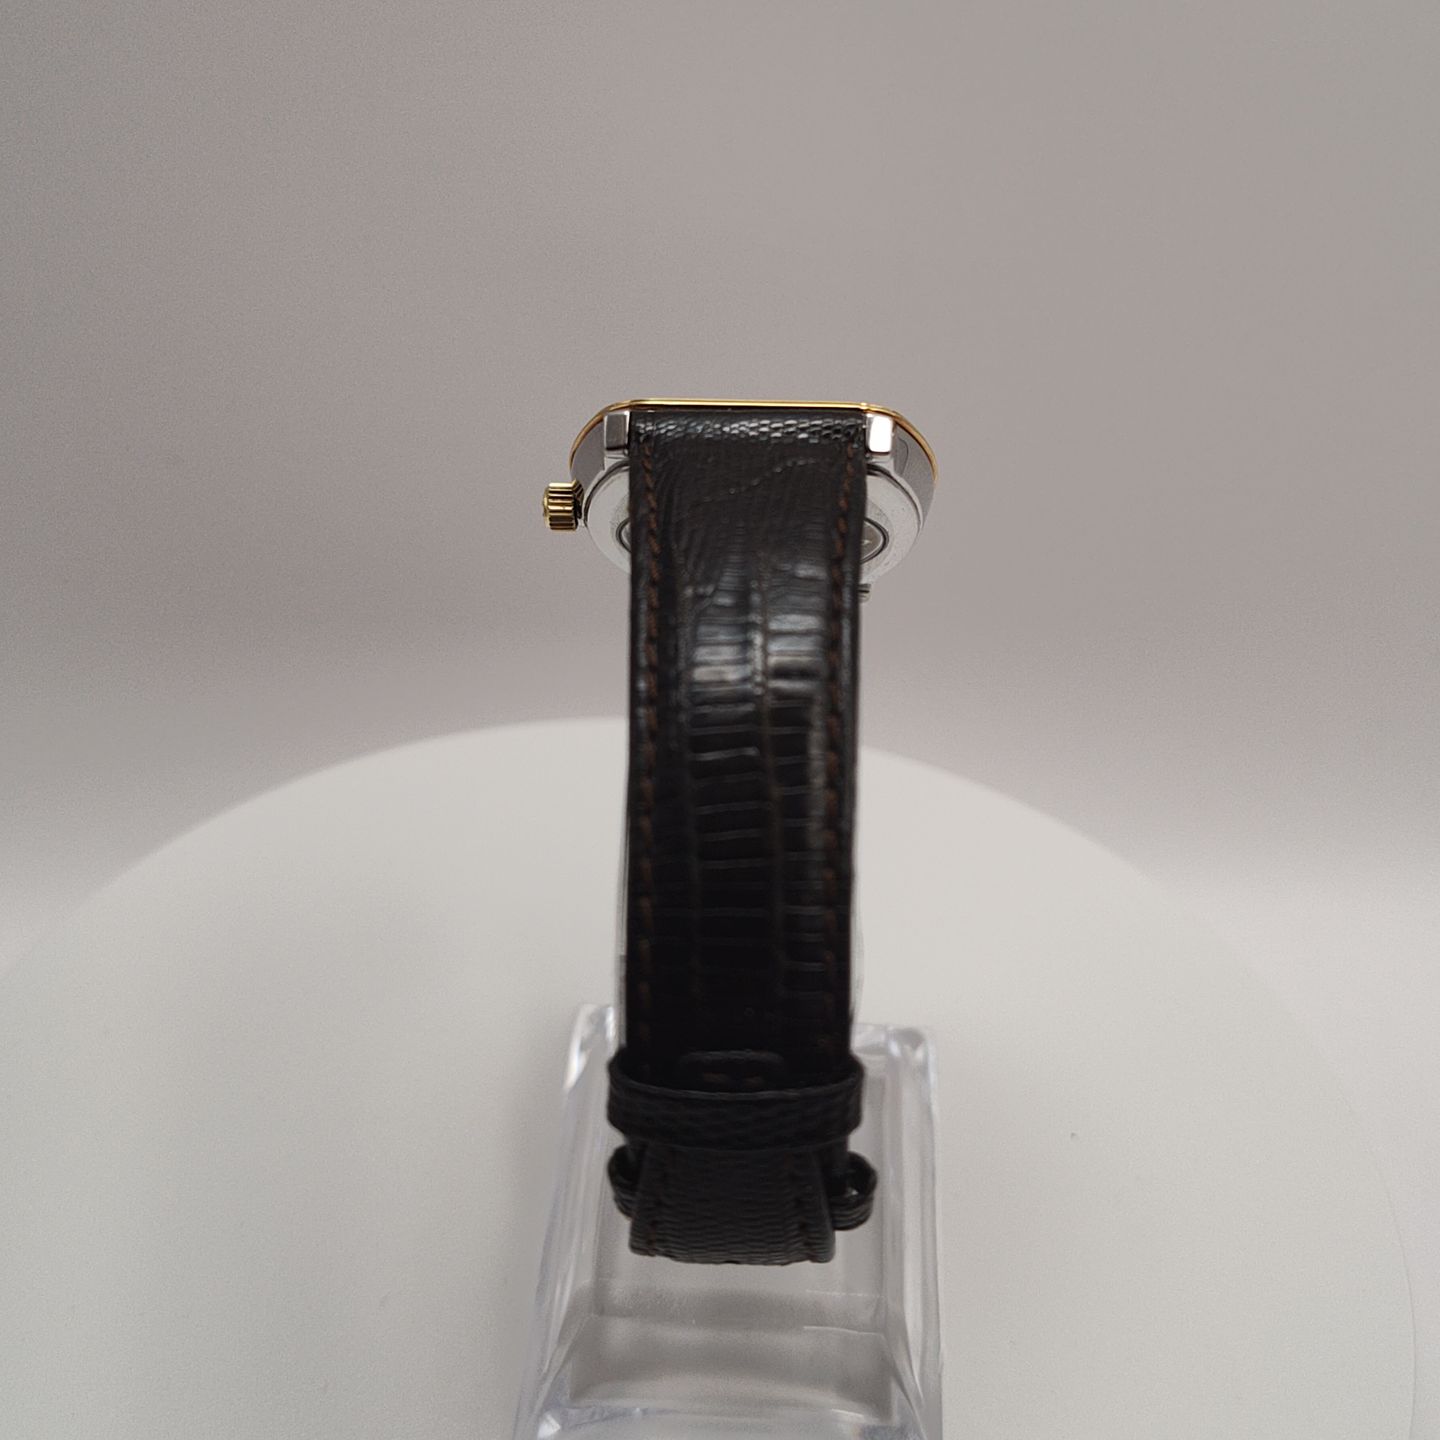 Eterna Vintage Eterna Mechanical Tonneau Box 3330.47 1855 (Unknown (random serial)) - White dial 41 mm Gold/Steel case (4/8)